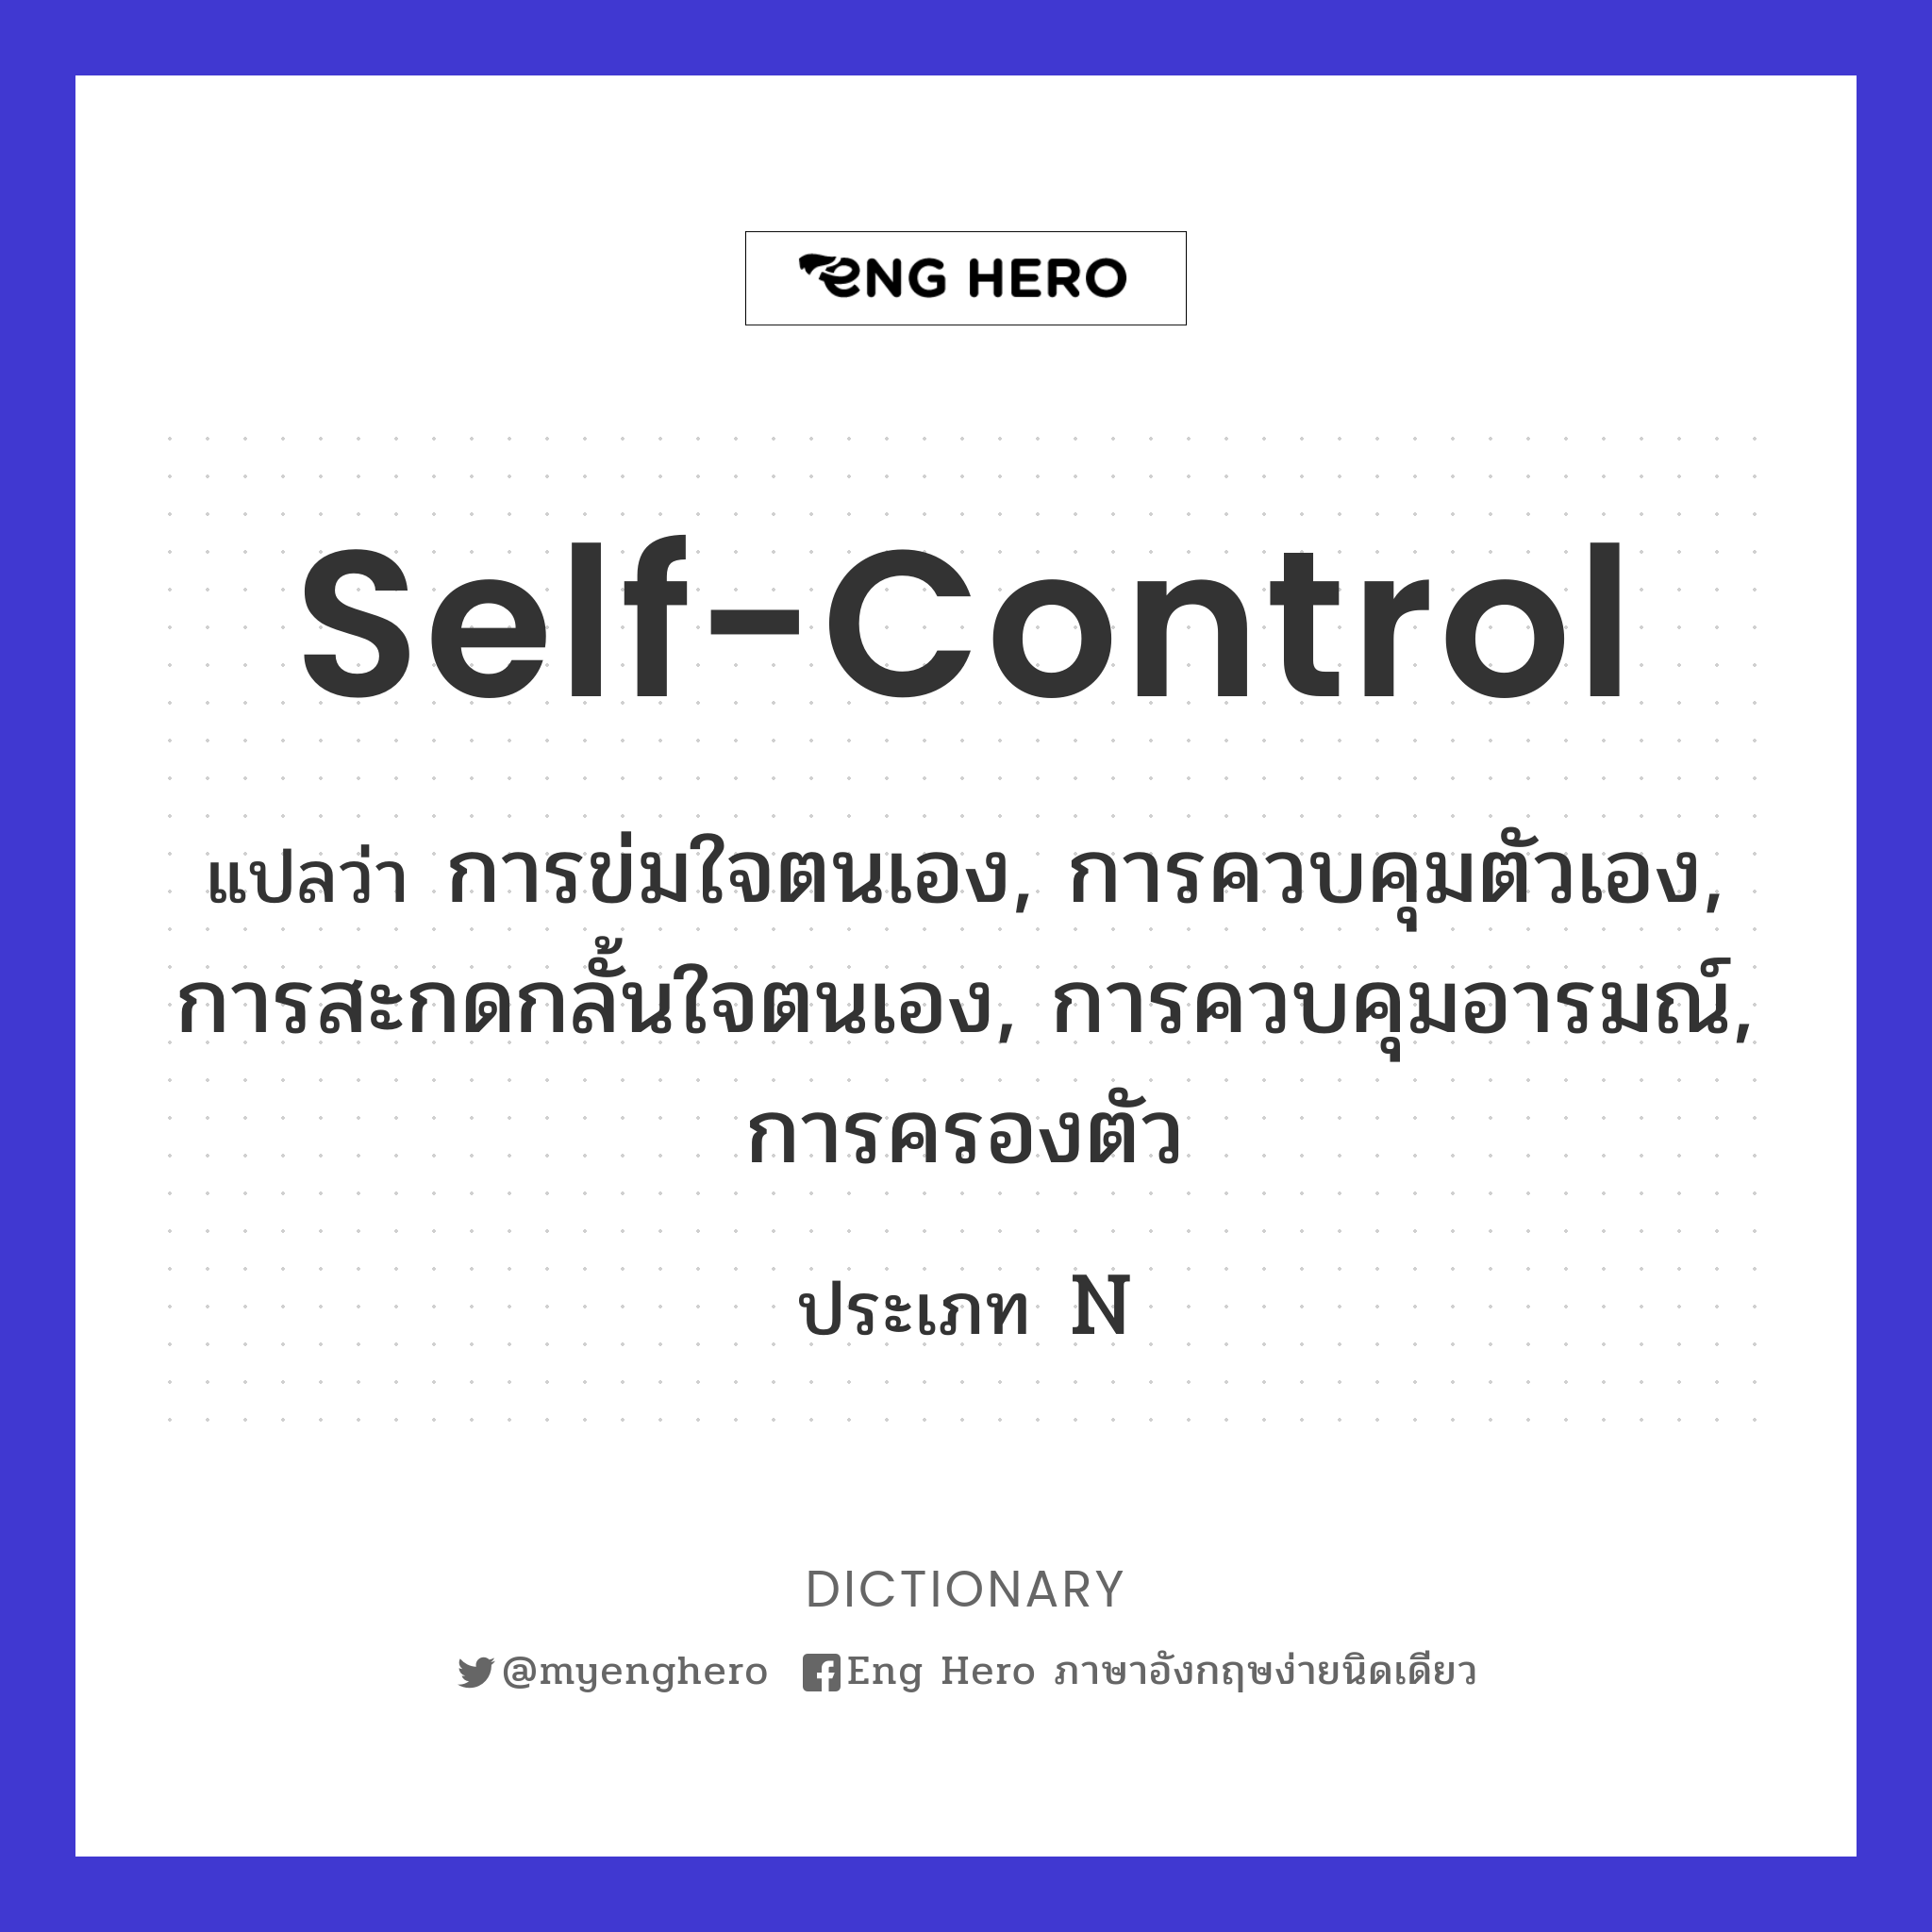 self-control